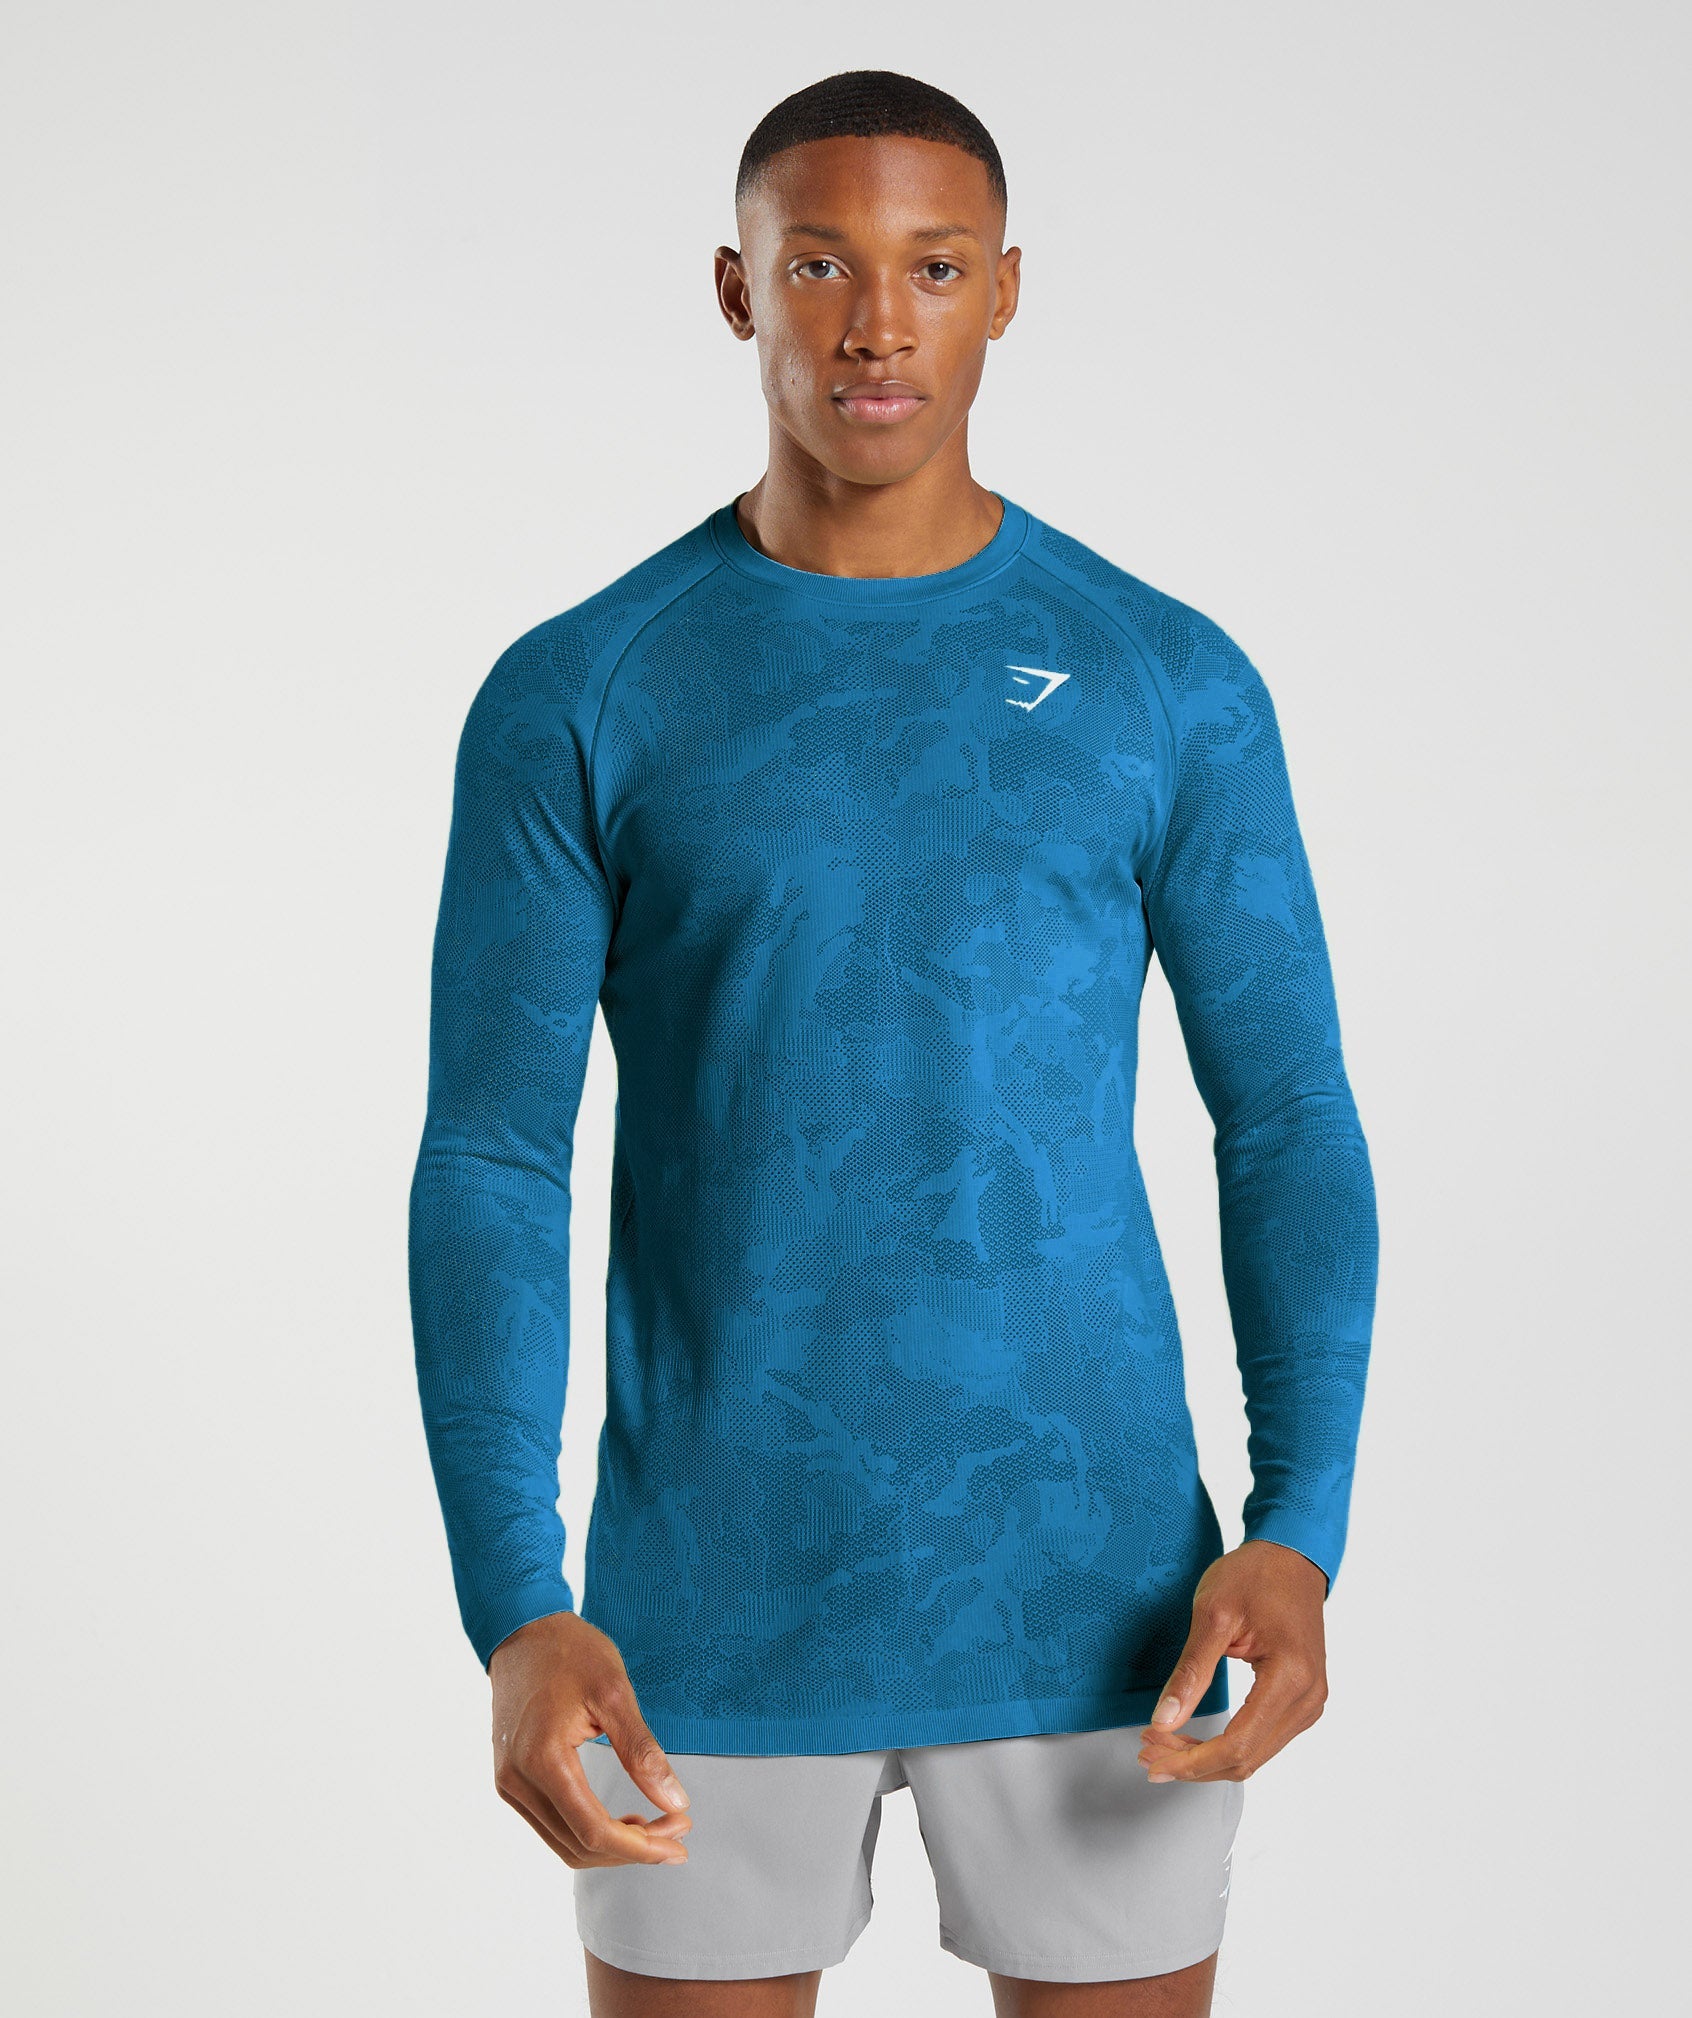 Gymshark Geo Seamless Long Sleeve T-Shirt - Atlantic Blue/Shark Blue